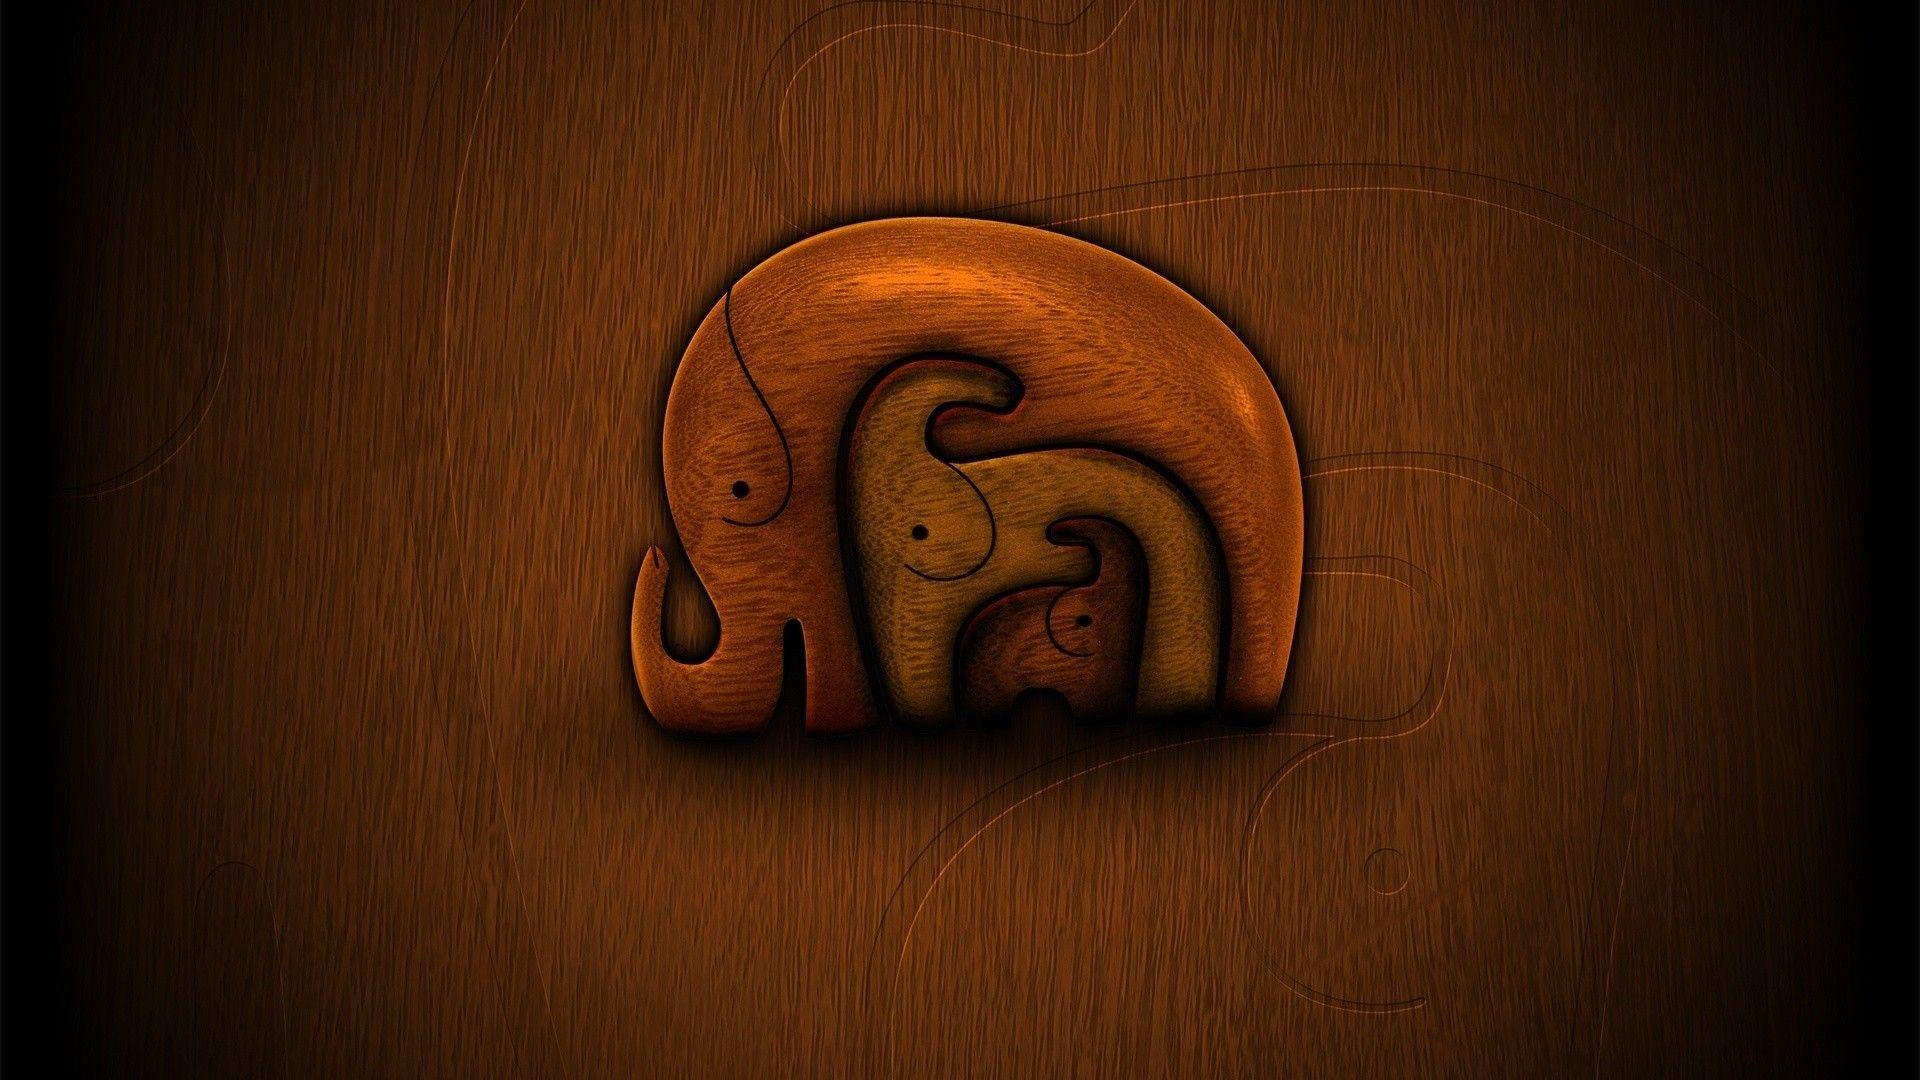 Download Wood Elephants Wallpaper Wallpoper 1920x1080PX Elephant